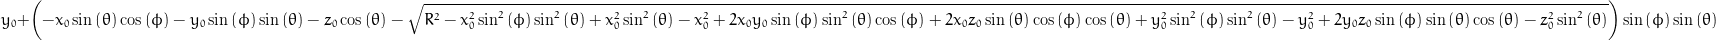 y_{0} + \left(- x_{0} \sin{\left (\theta \right )} \cos{\left (\phi \right )} - y_{0} \sin{\left (\phi \right )} \sin{\left (\theta \right )} - z_{0} \cos{\left (\theta \right )} - \sqrt{R^{2} - x_{0}^{2} \sin^{2}{\left (\phi \right )} \sin^{2}{\left (\theta \right )} + x_{0}^{2} \sin^{2}{\left (\theta \right )} - x_{0}^{2} + 2 x_{0} y_{0} \sin{\left (\phi \right )} \sin^{2}{\left (\theta \right )} \cos{\left (\phi \right )} + 2 x_{0} z_{0} \sin{\left (\theta \right )} \cos{\left (\phi \right )} \cos{\left (\theta \right )} + y_{0}^{2} \sin^{2}{\left (\phi \right )} \sin^{2}{\left (\theta \right )} - y_{0}^{2} + 2 y_{0} z_{0} \sin{\left (\phi \right )} \sin{\left (\theta \right )} \cos{\left (\theta \right )} - z_{0}^{2} \sin^{2}{\left (\theta \right )}}\right) \sin{\left (\phi \right )} \sin{\left (\theta \right )}